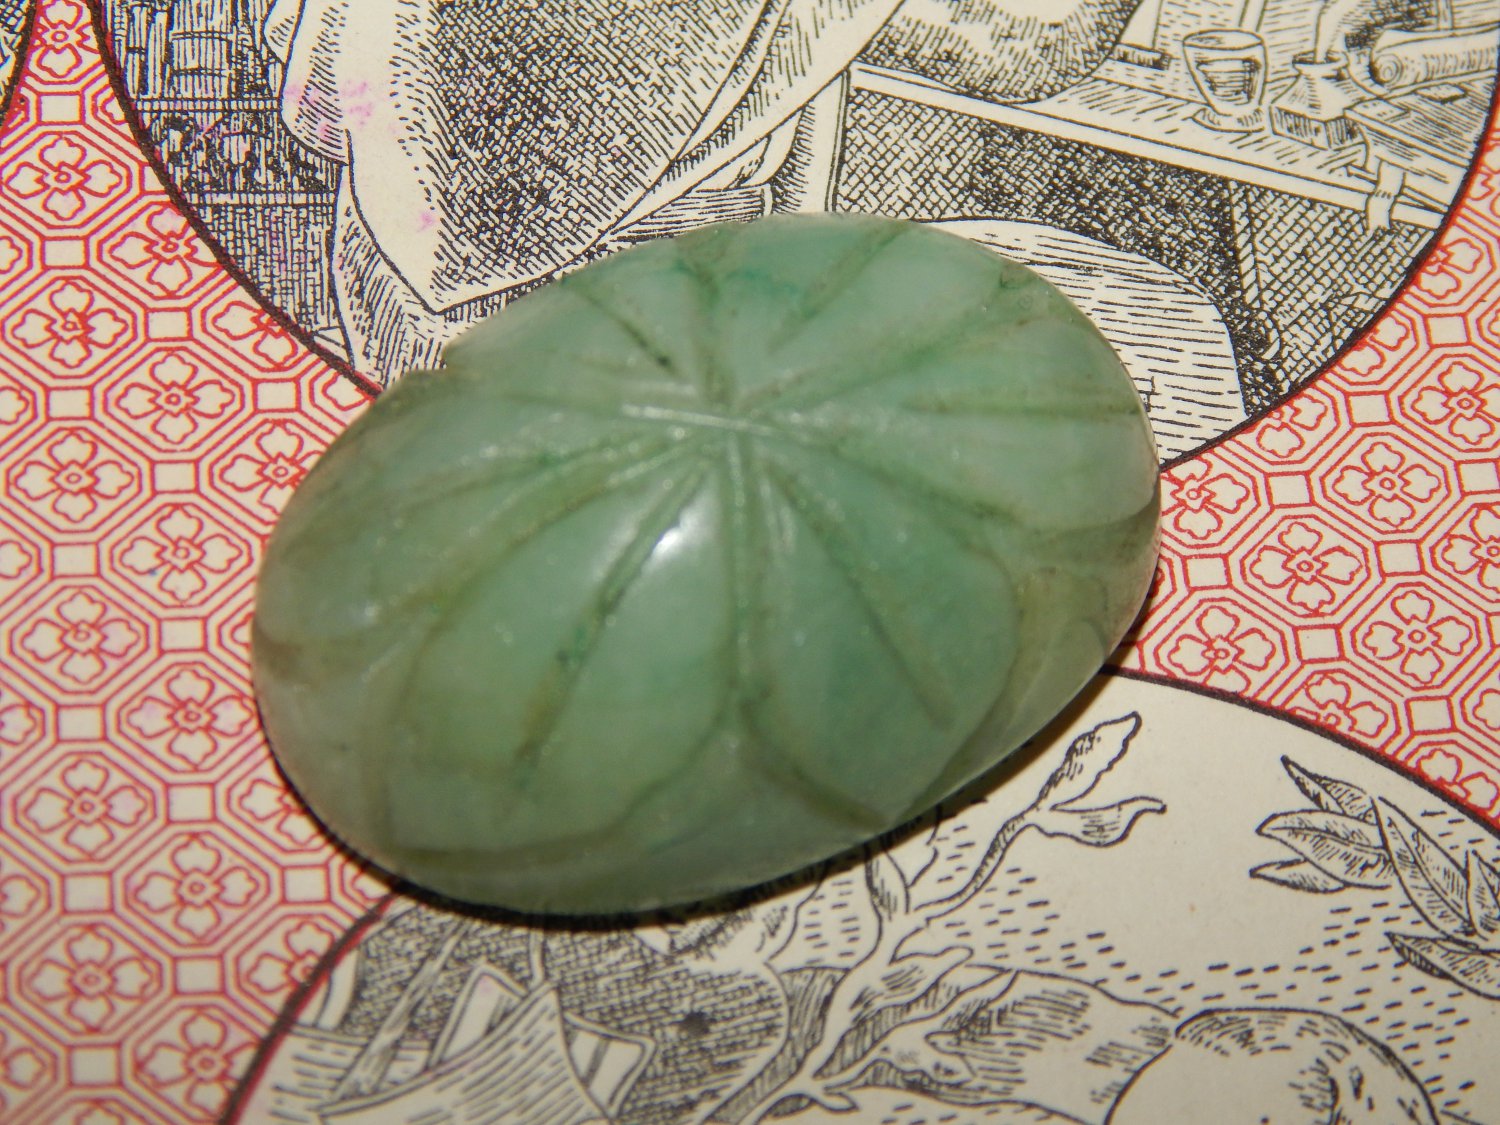 GENUINE EMERALD - Earth-mined Emerald - 79ct Floral Mandala Carved Emerald